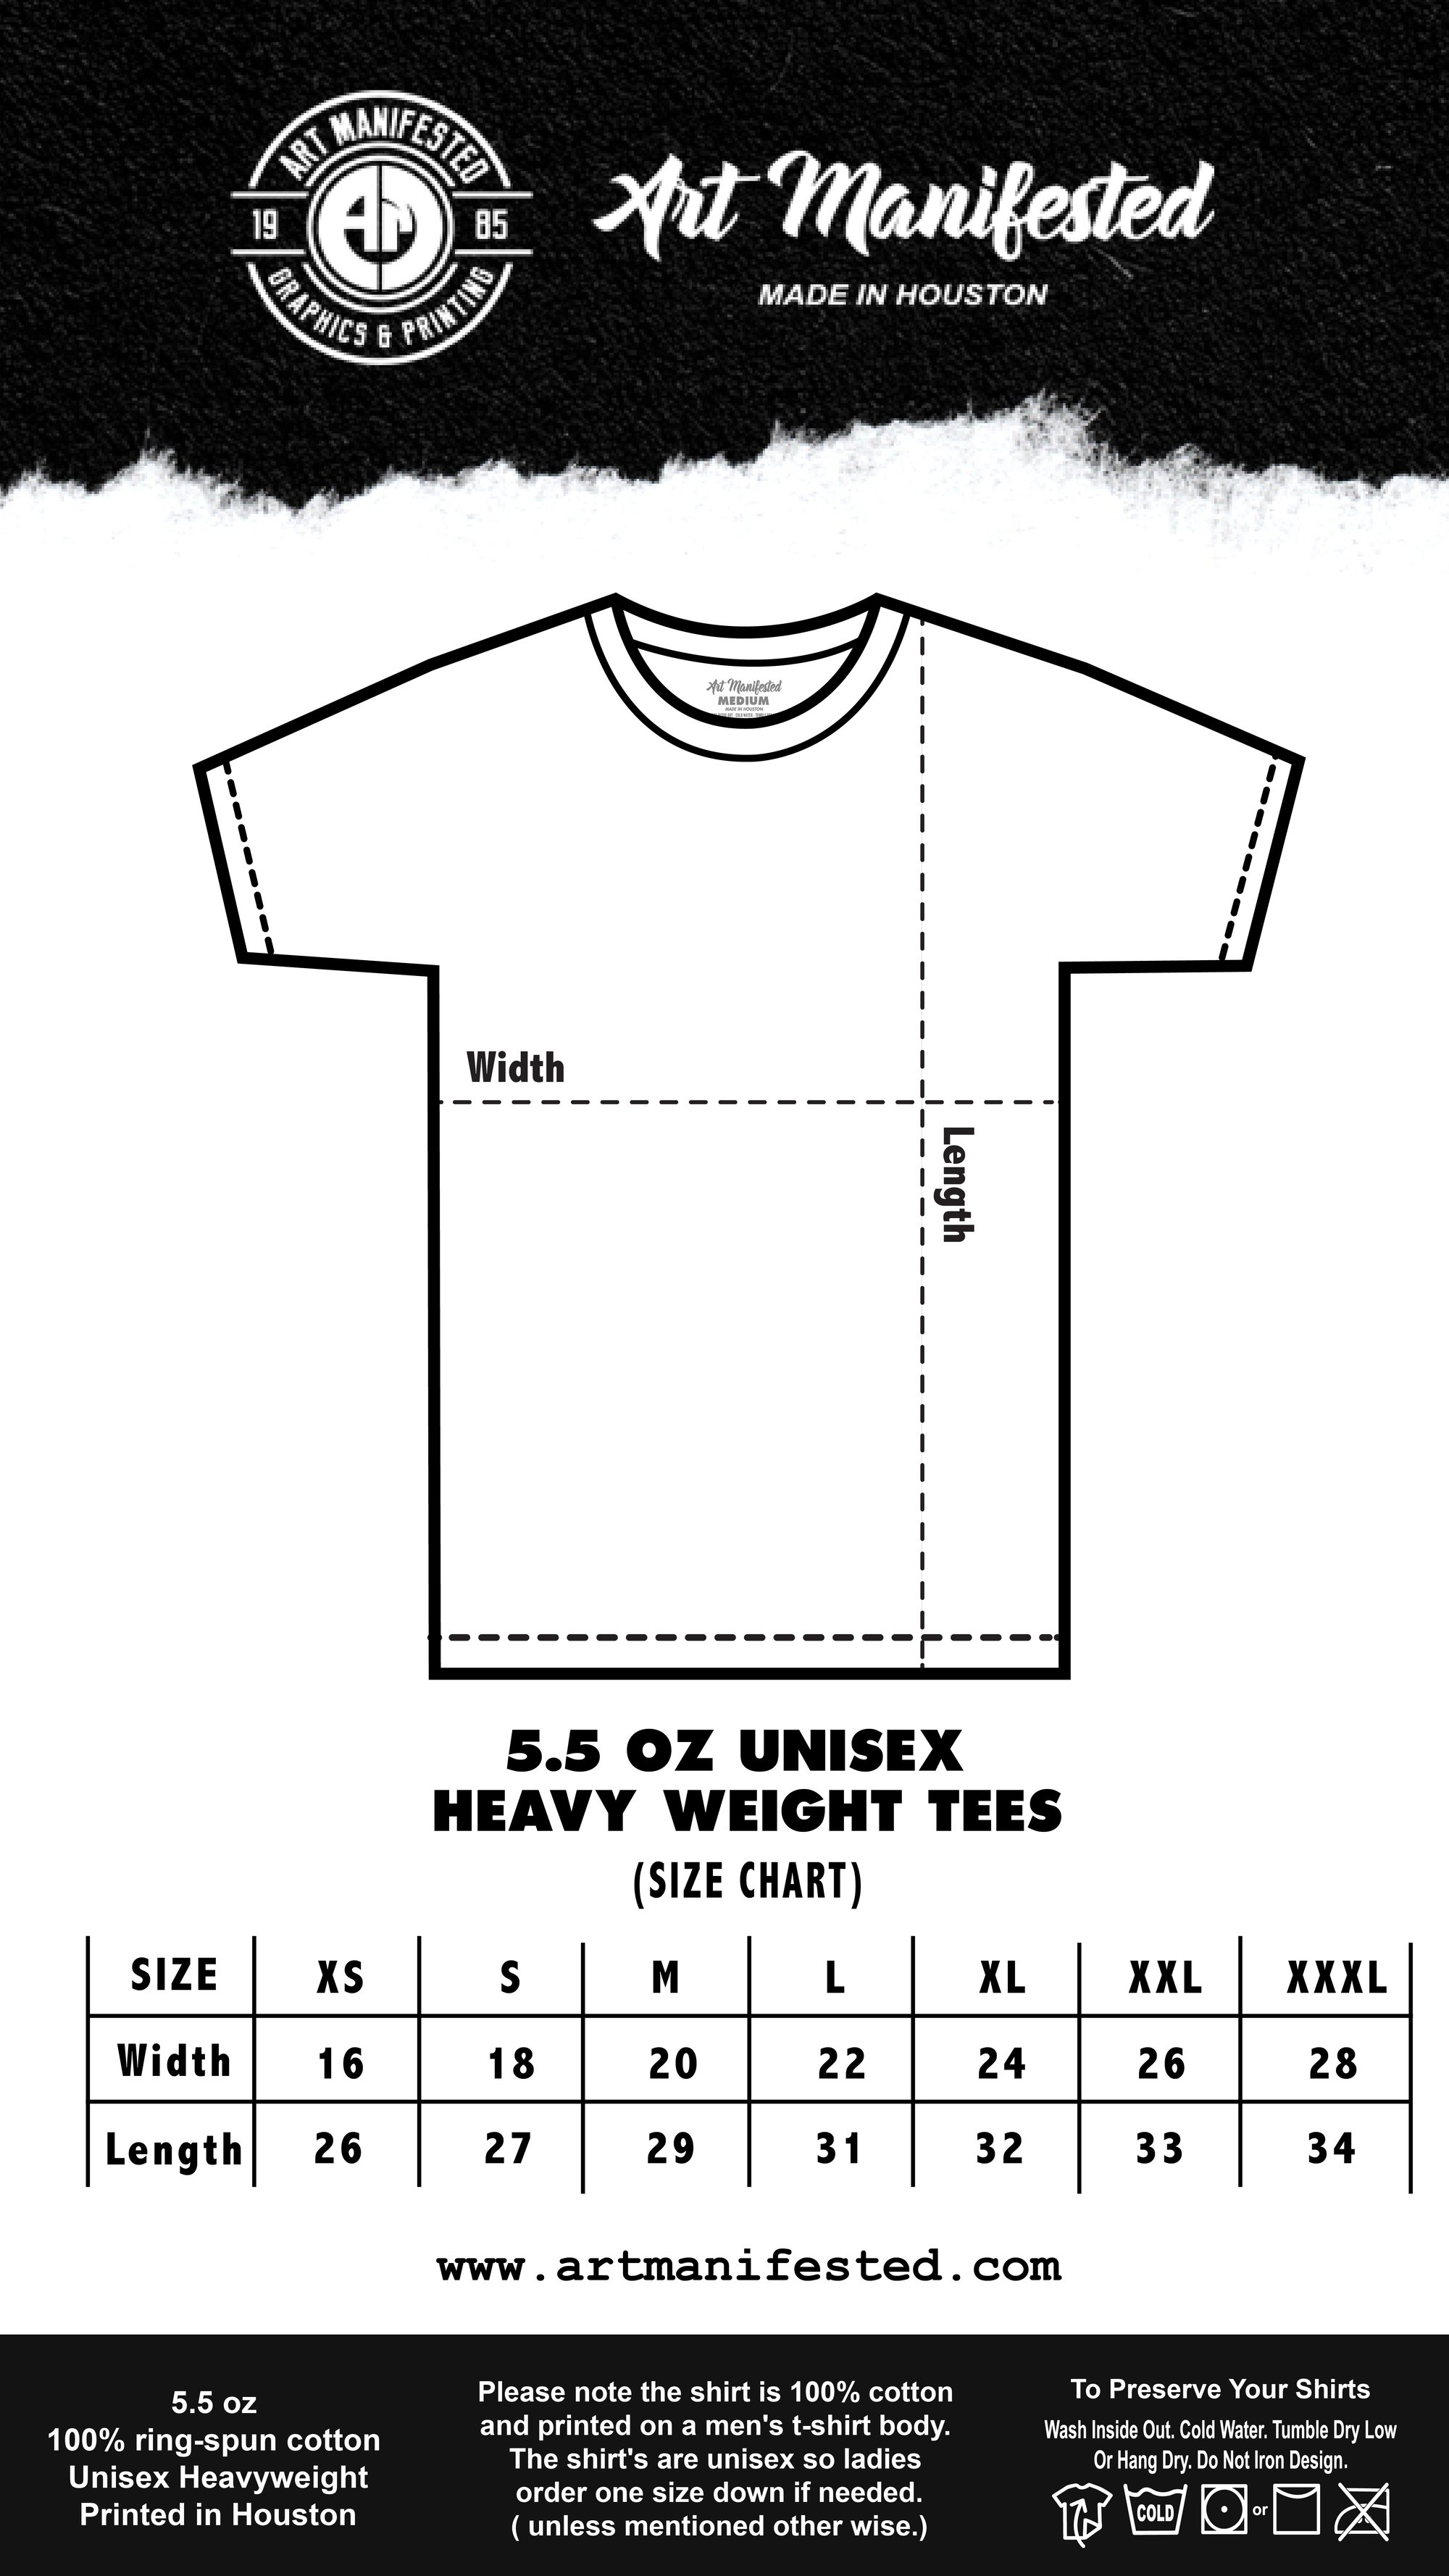 Swangin & Bangin T-Shirt, Houston, Baseball